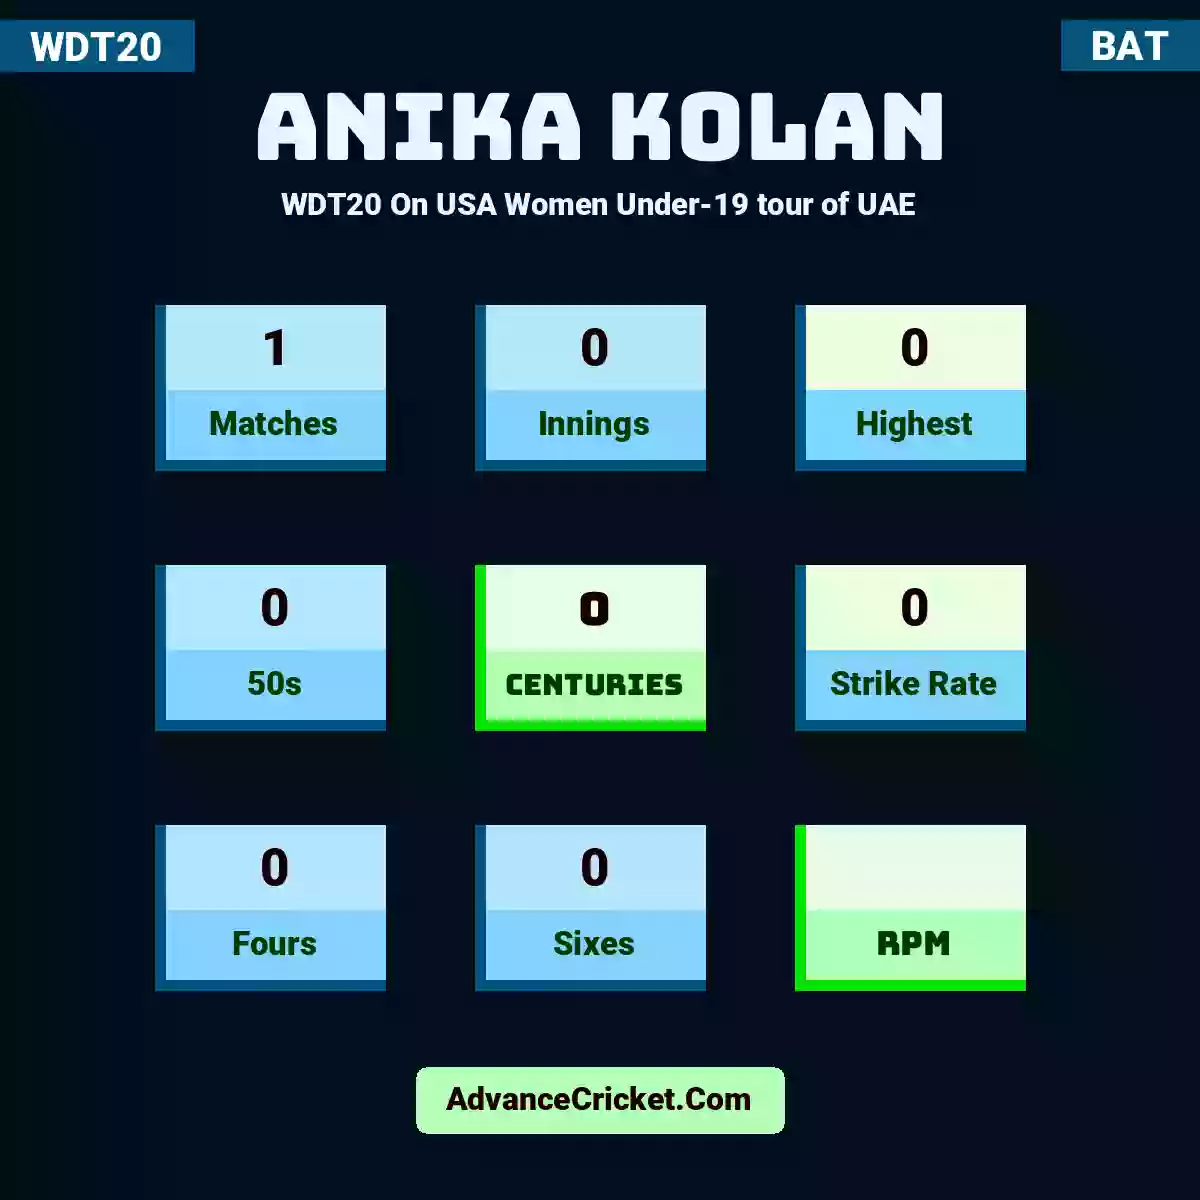 Anika Kolan WDT20  On USA Women Under-19 tour of UAE, Anika Kolan played 1 matches, scored 0 runs as highest, 0 half-centuries, and 0 centuries, with a strike rate of 0. A.Kolan hit 0 fours and 0 sixes.